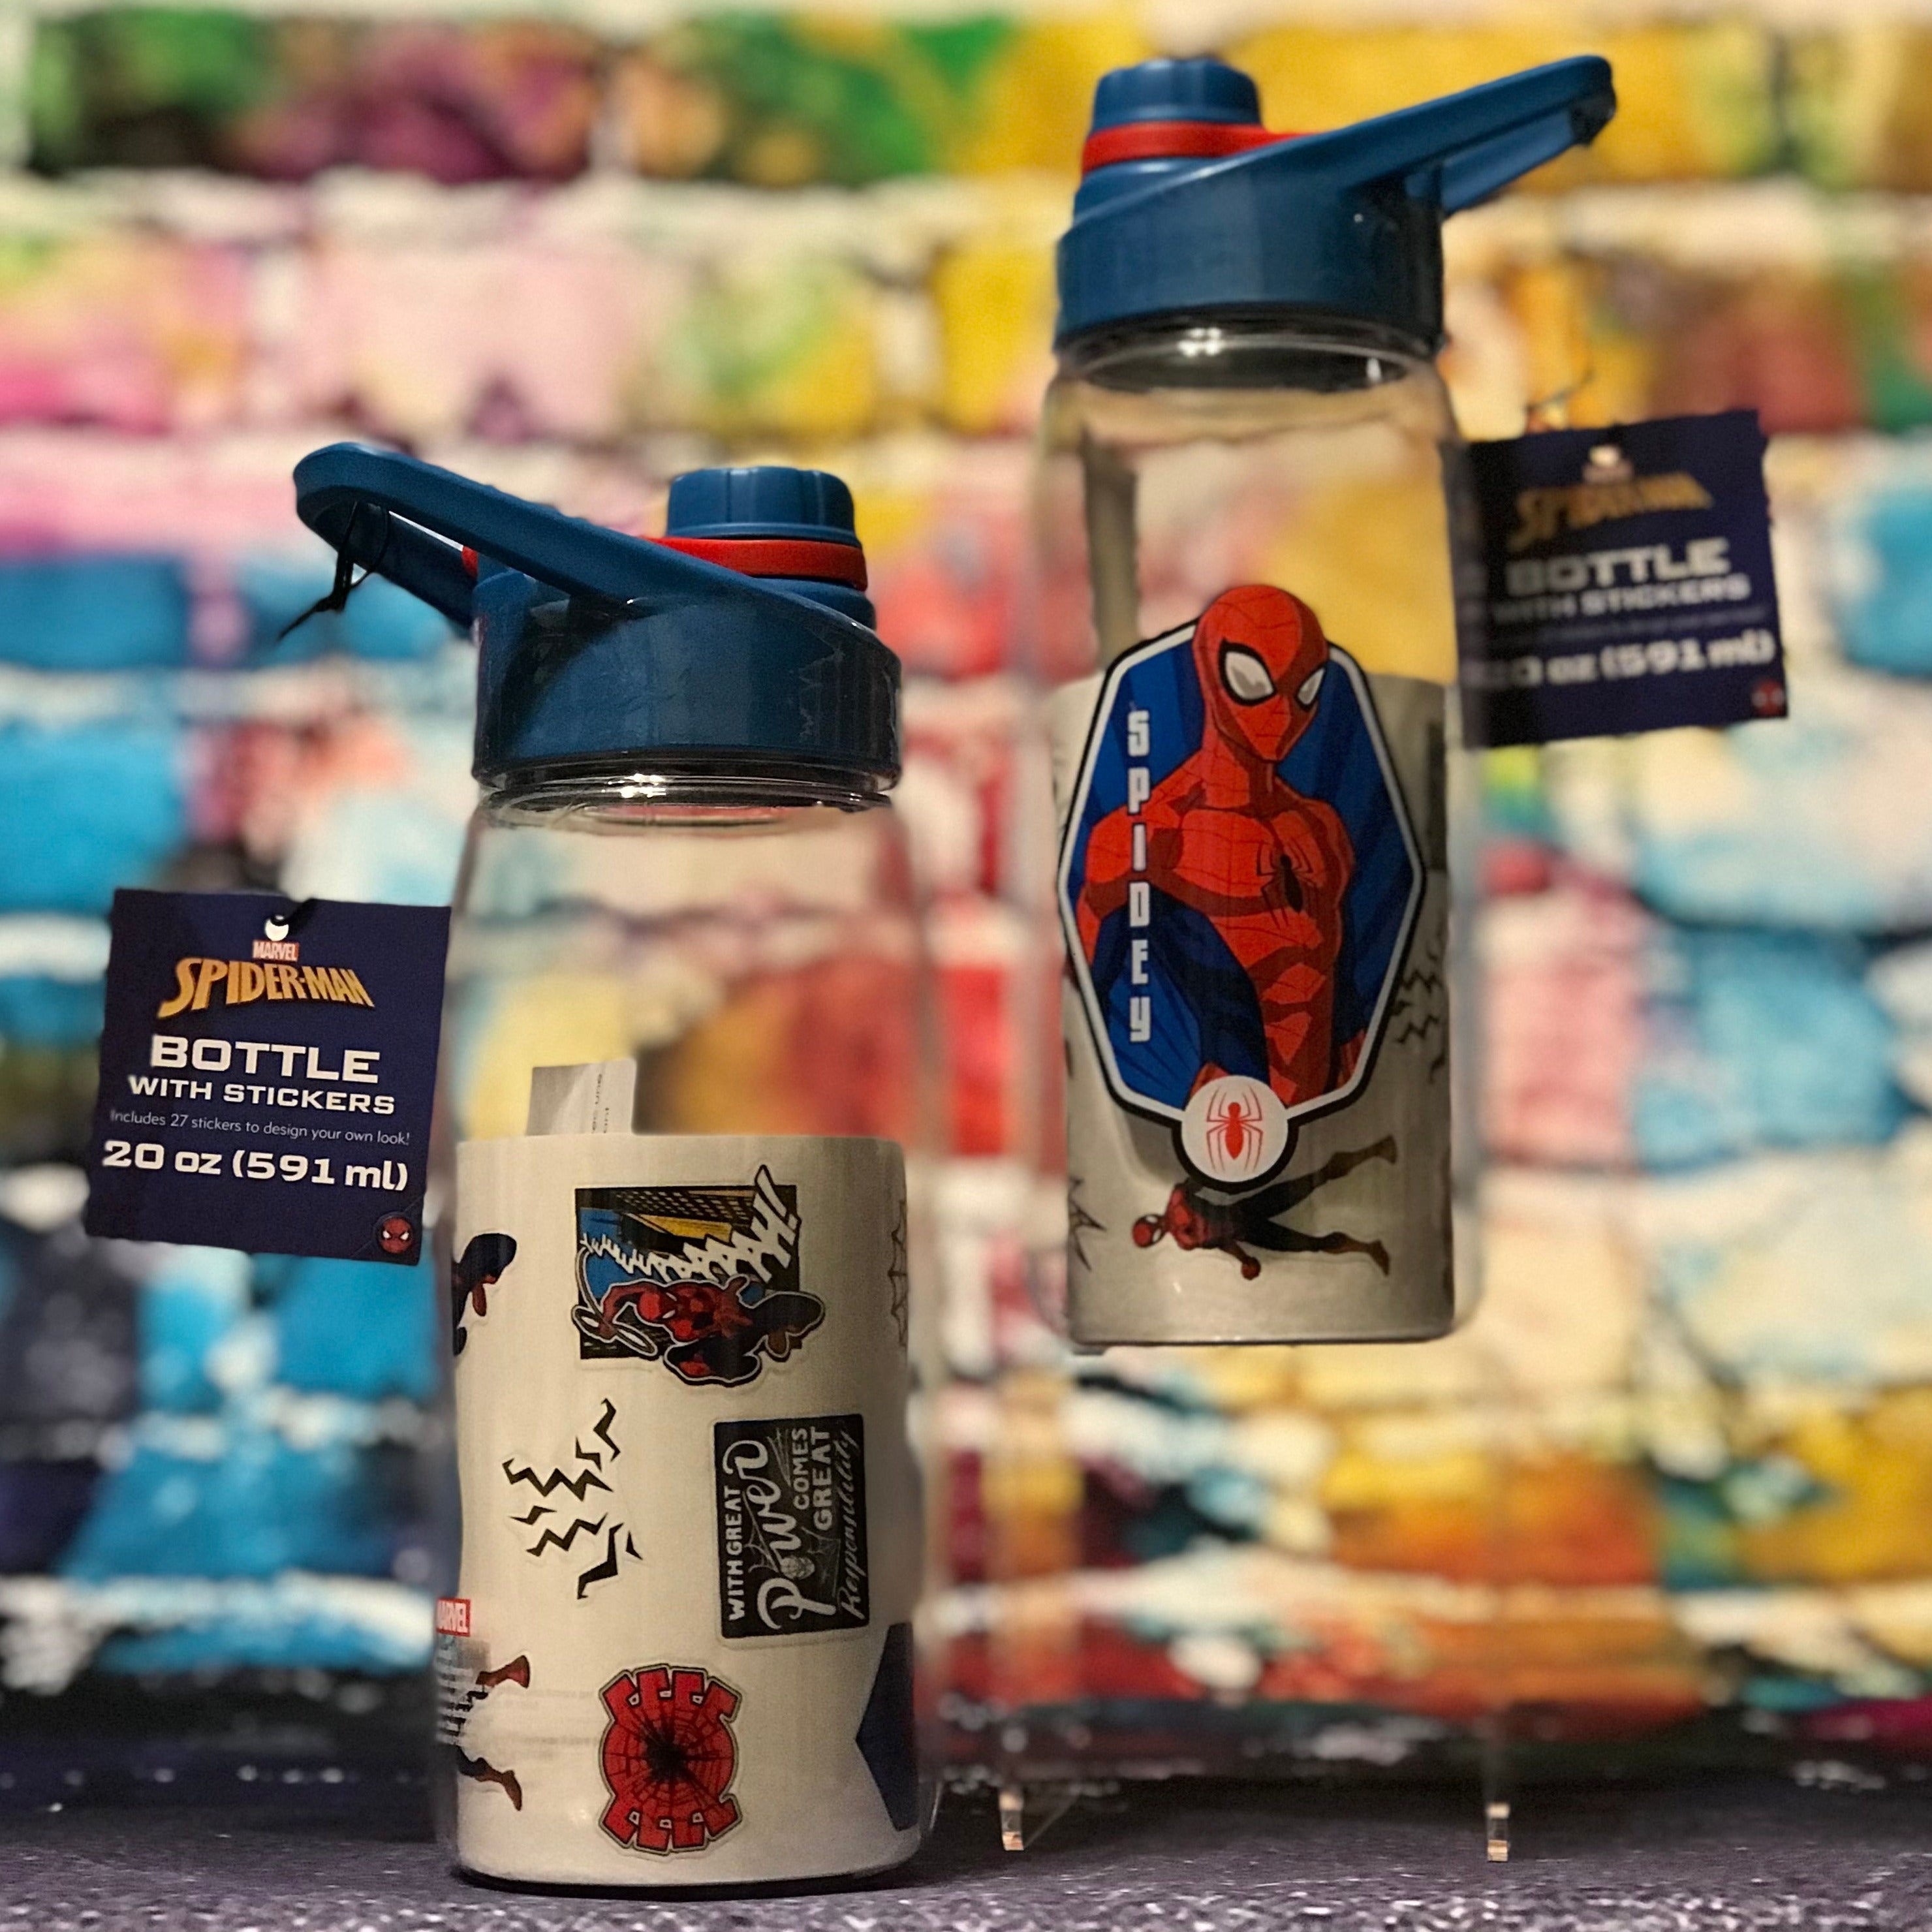 Spiderman Water Bottle Labels, Spiderman Bottle Labels, Water